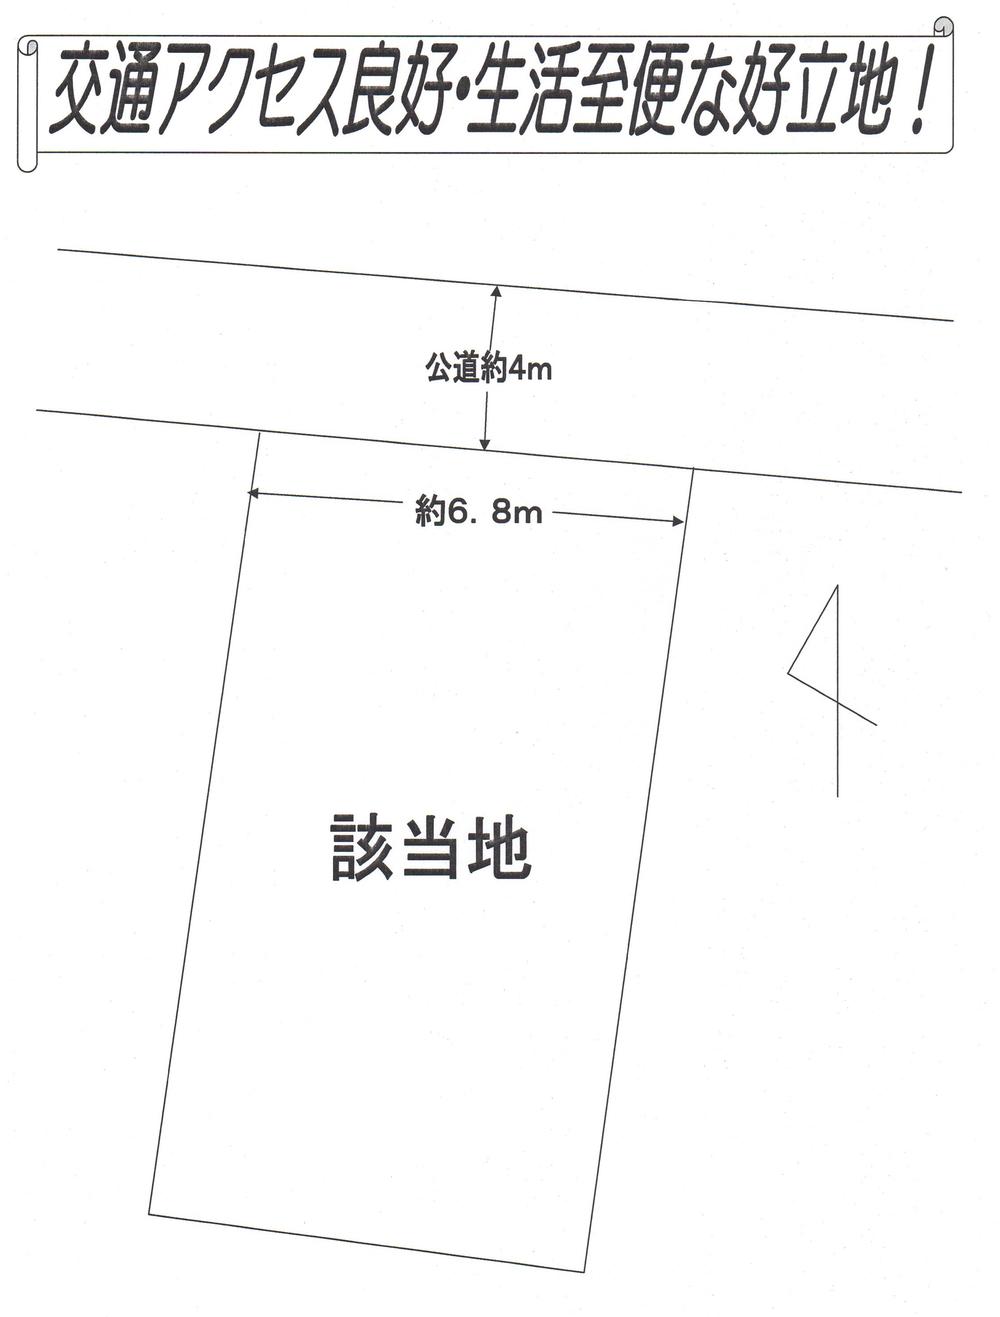 Compartment figure. Land price 9,147,000 yen, Land area 168 sq m